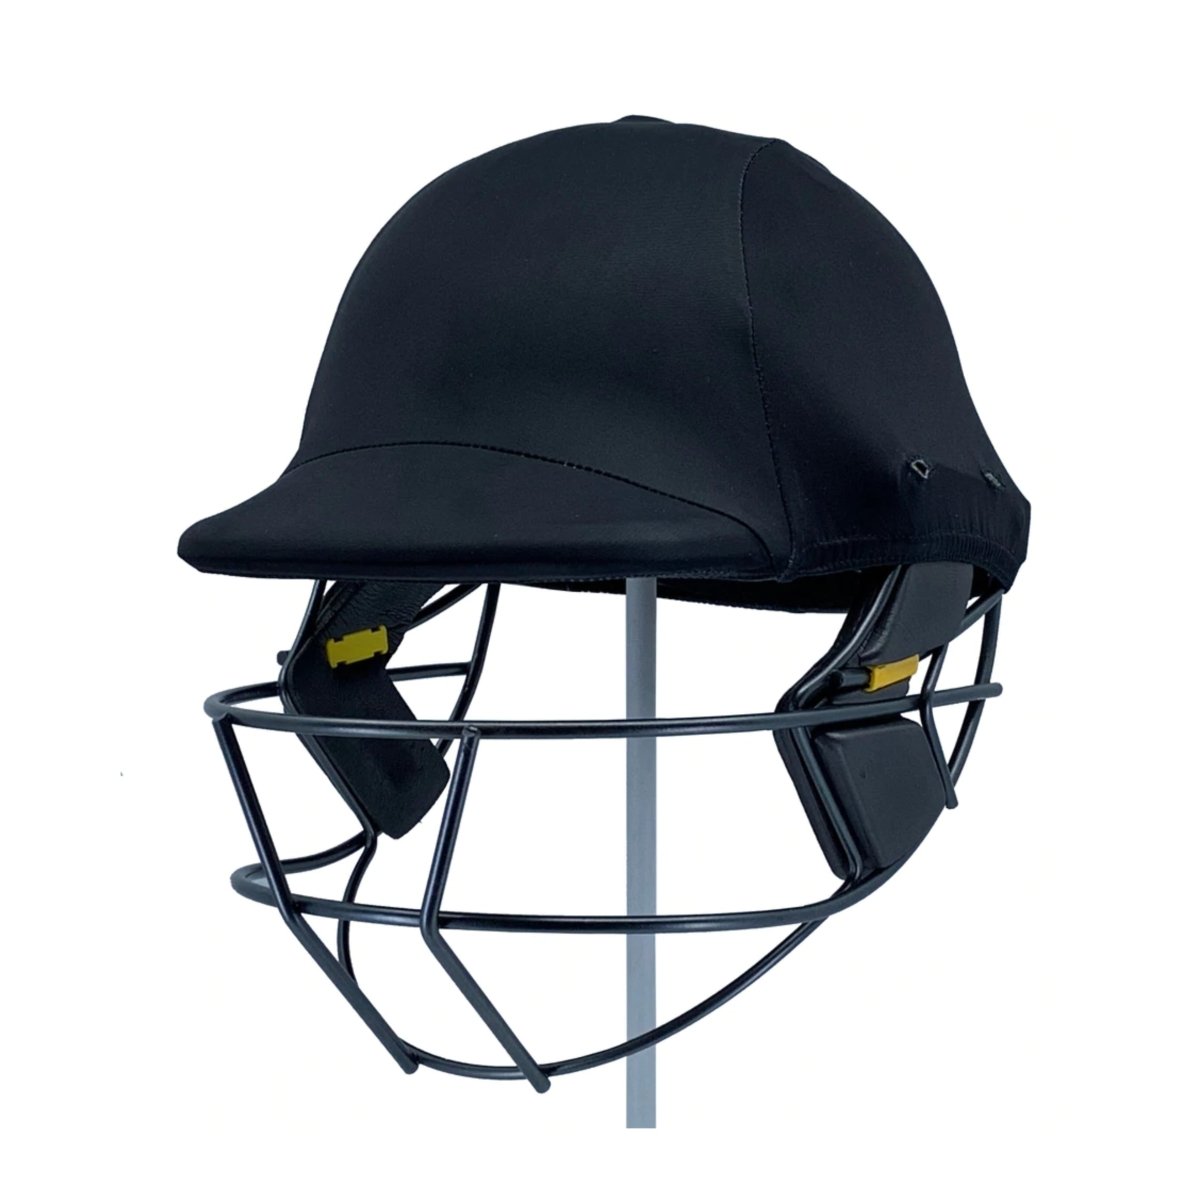 Cricket Helmet Covers.